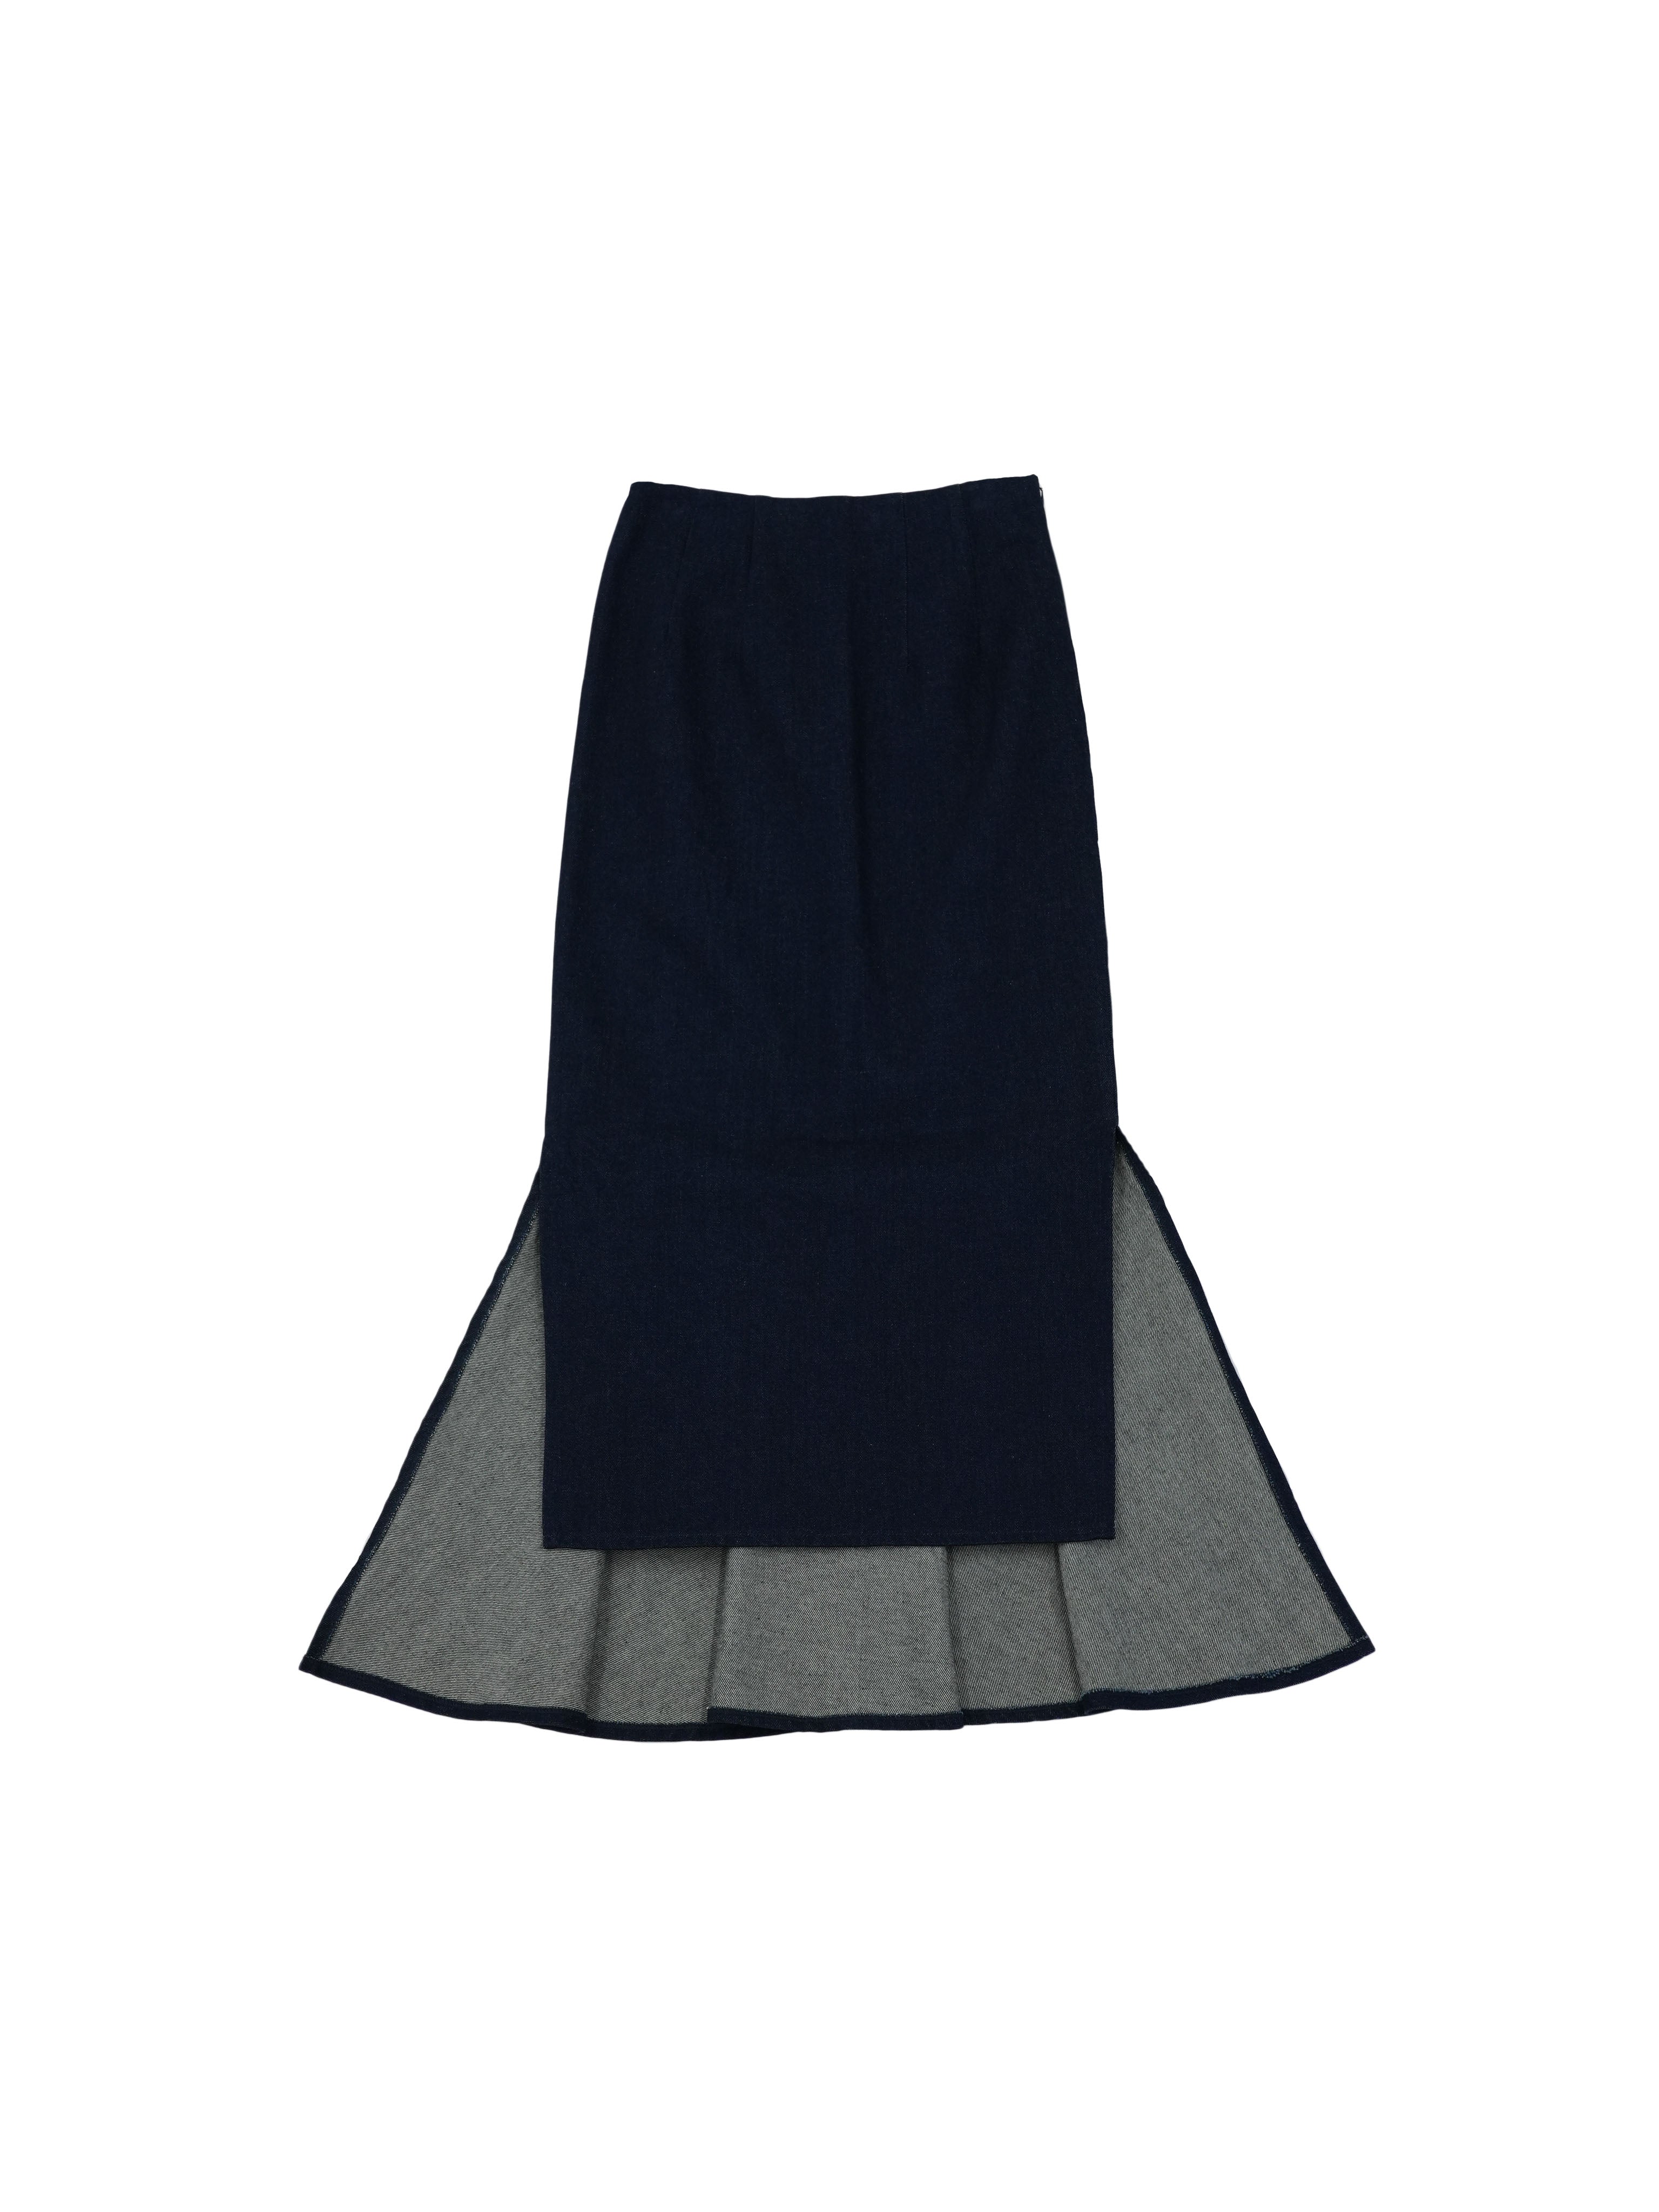 新品 clastellar highwaist mermaid skirt